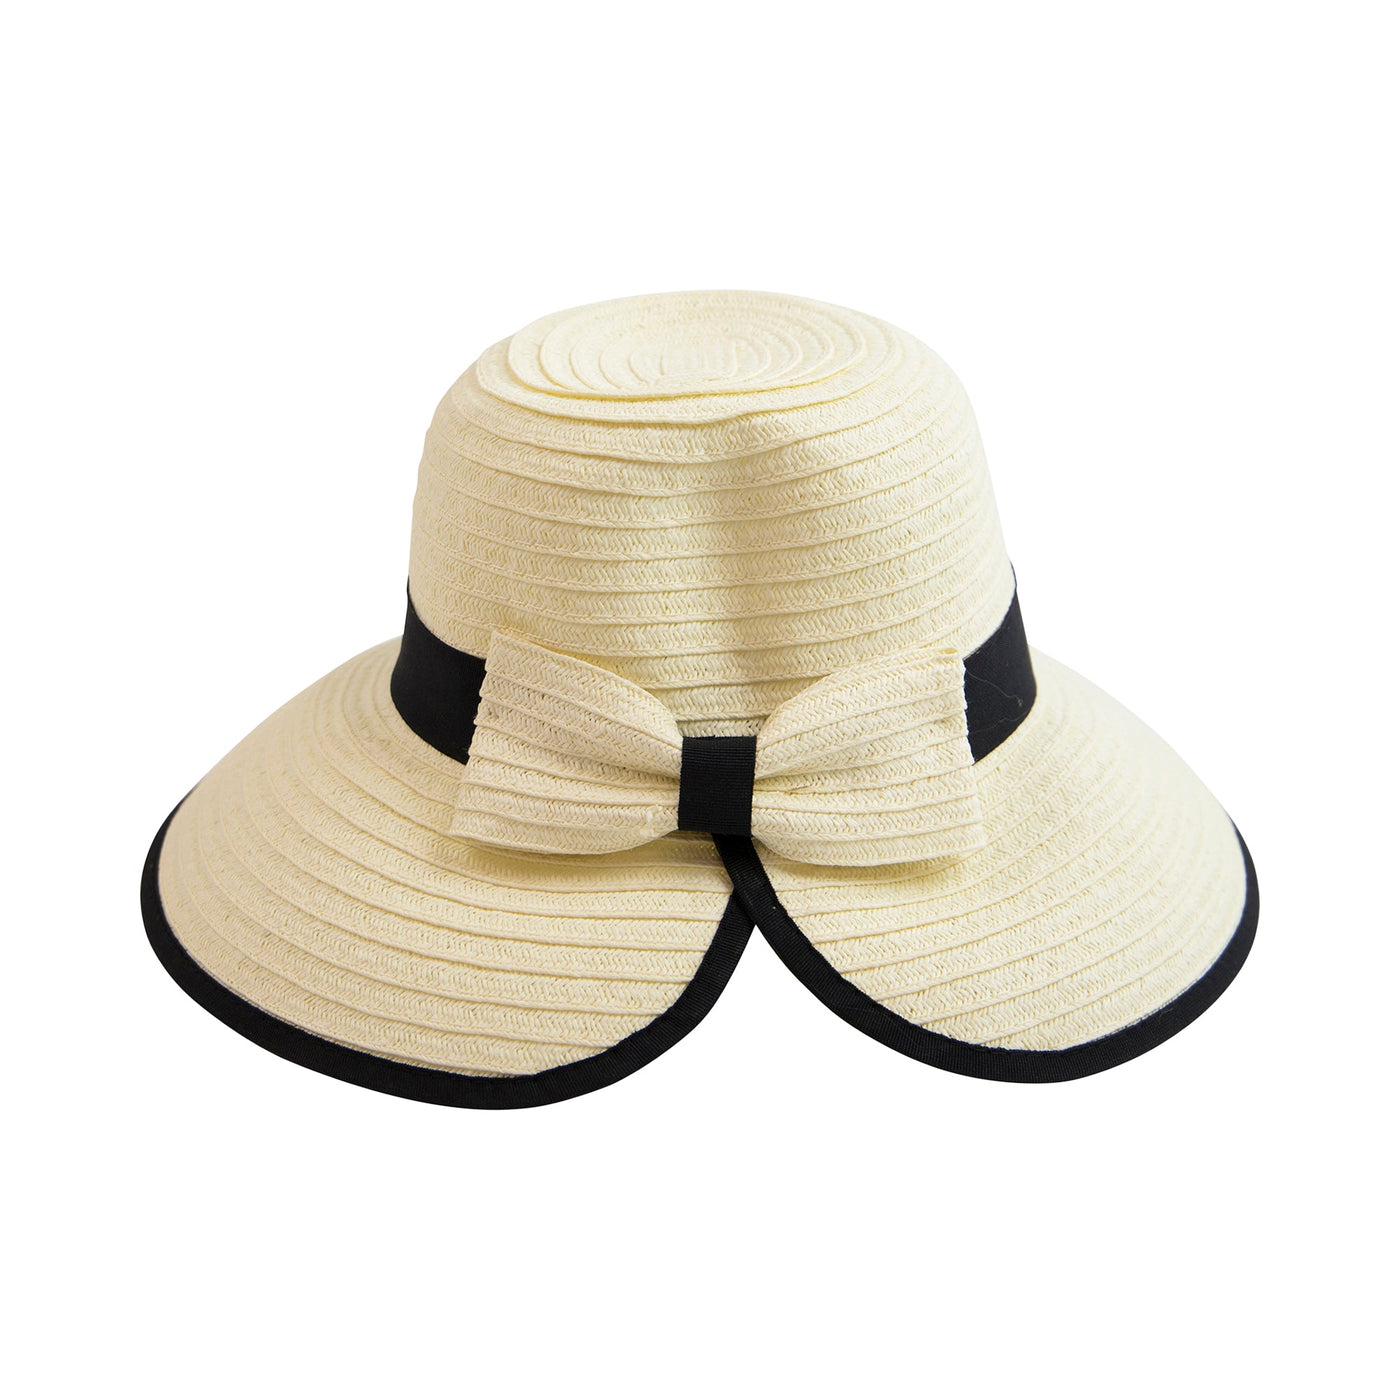 San Diego Hat Company Women's Sunbrim Hat